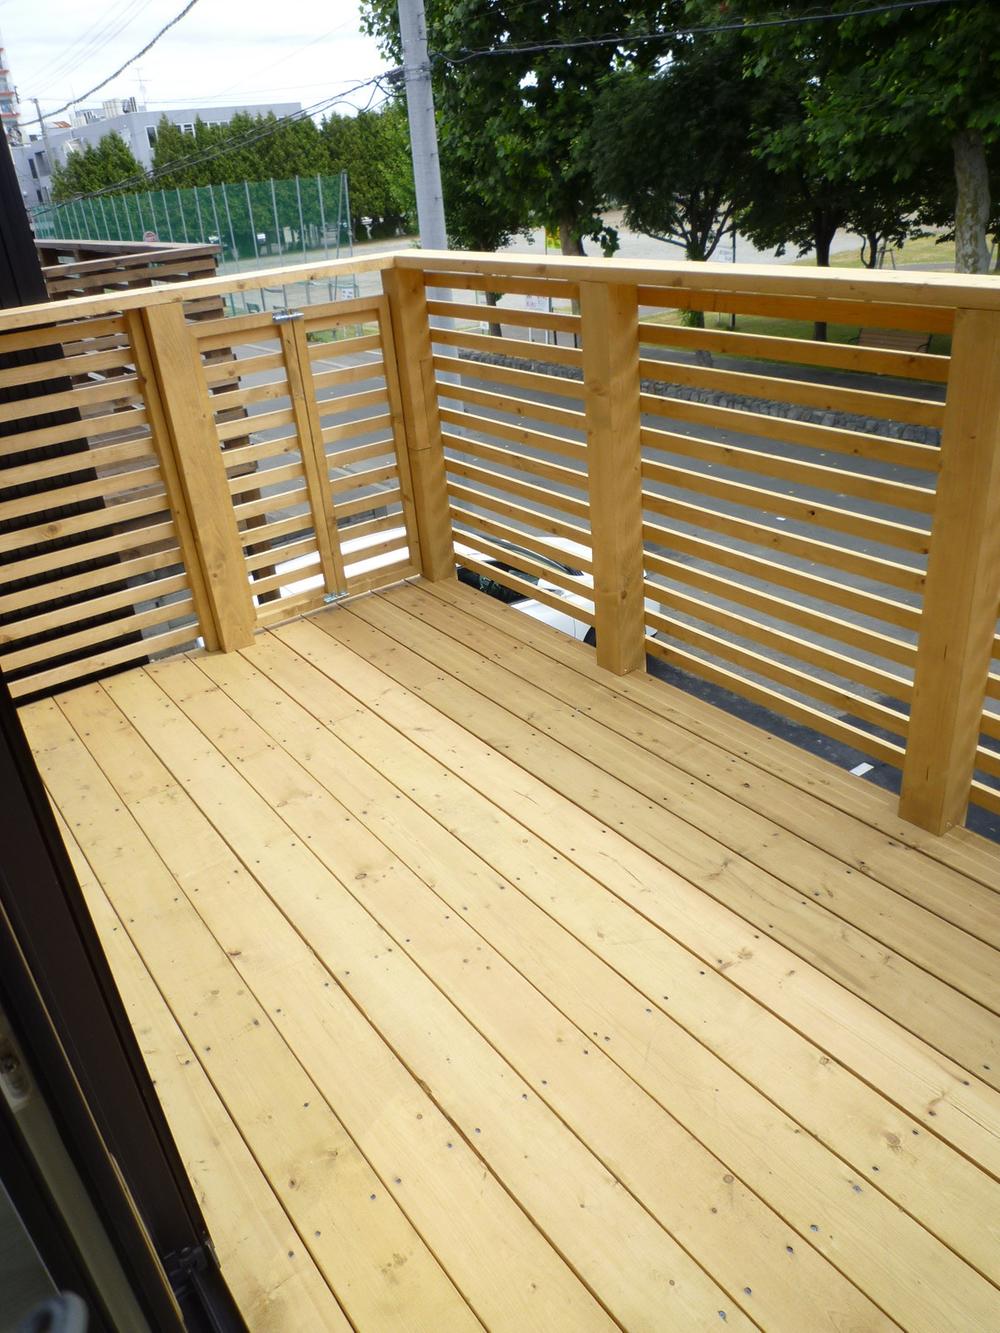 Balcony. Wood deck